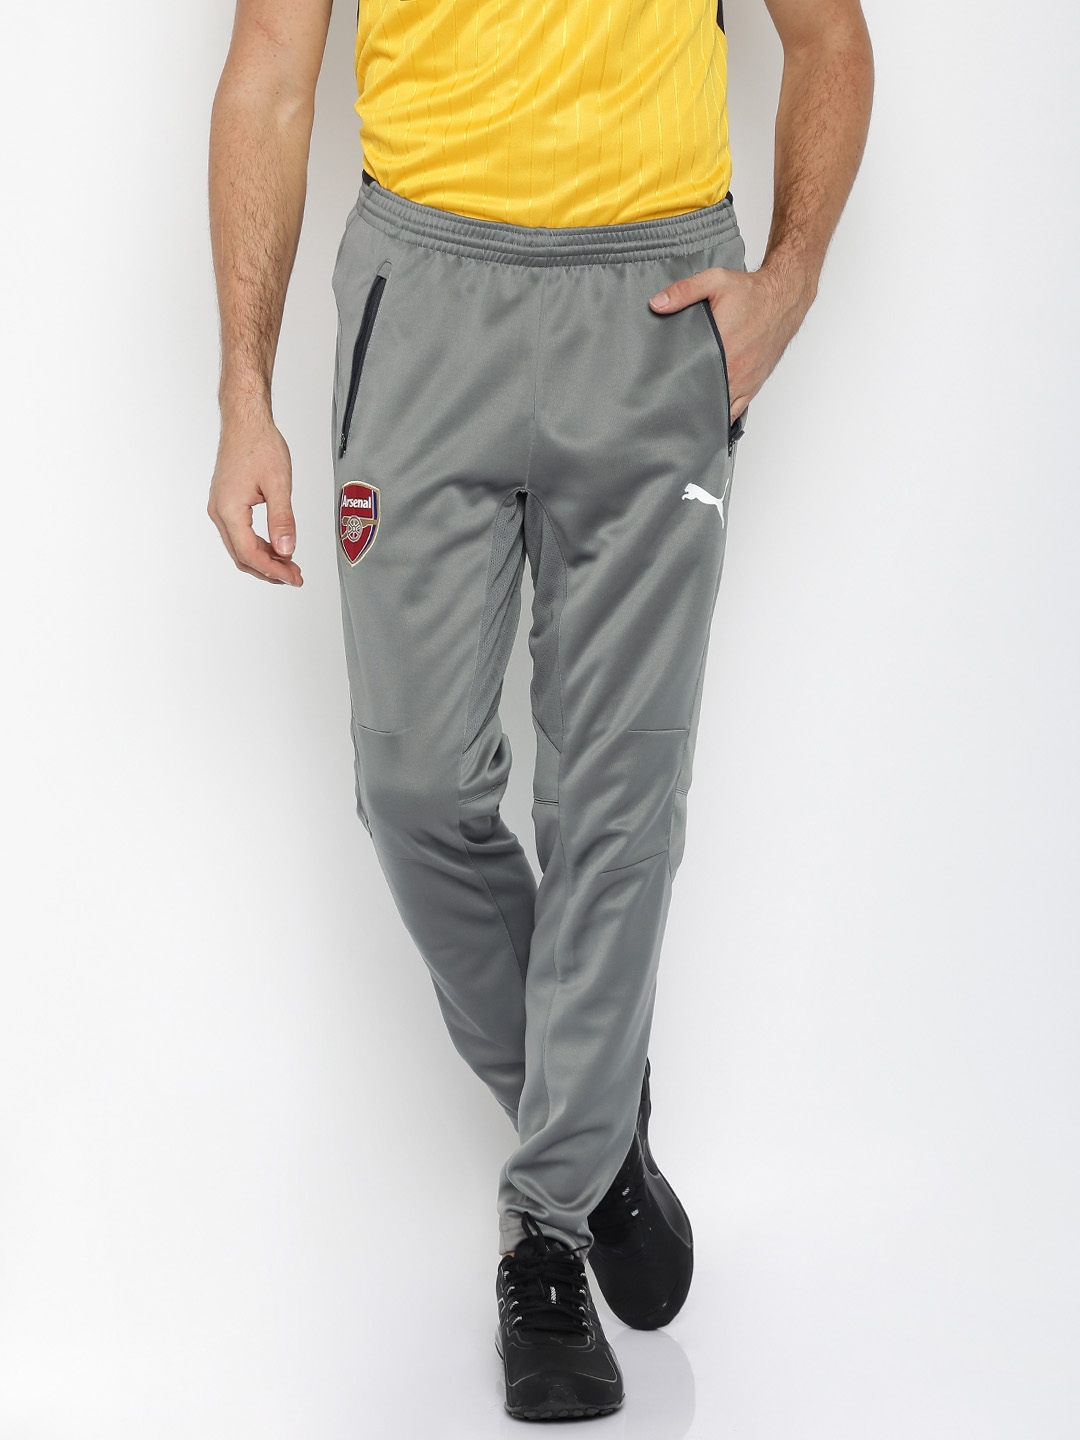 Puma Arsenal FC Training Pants Grey